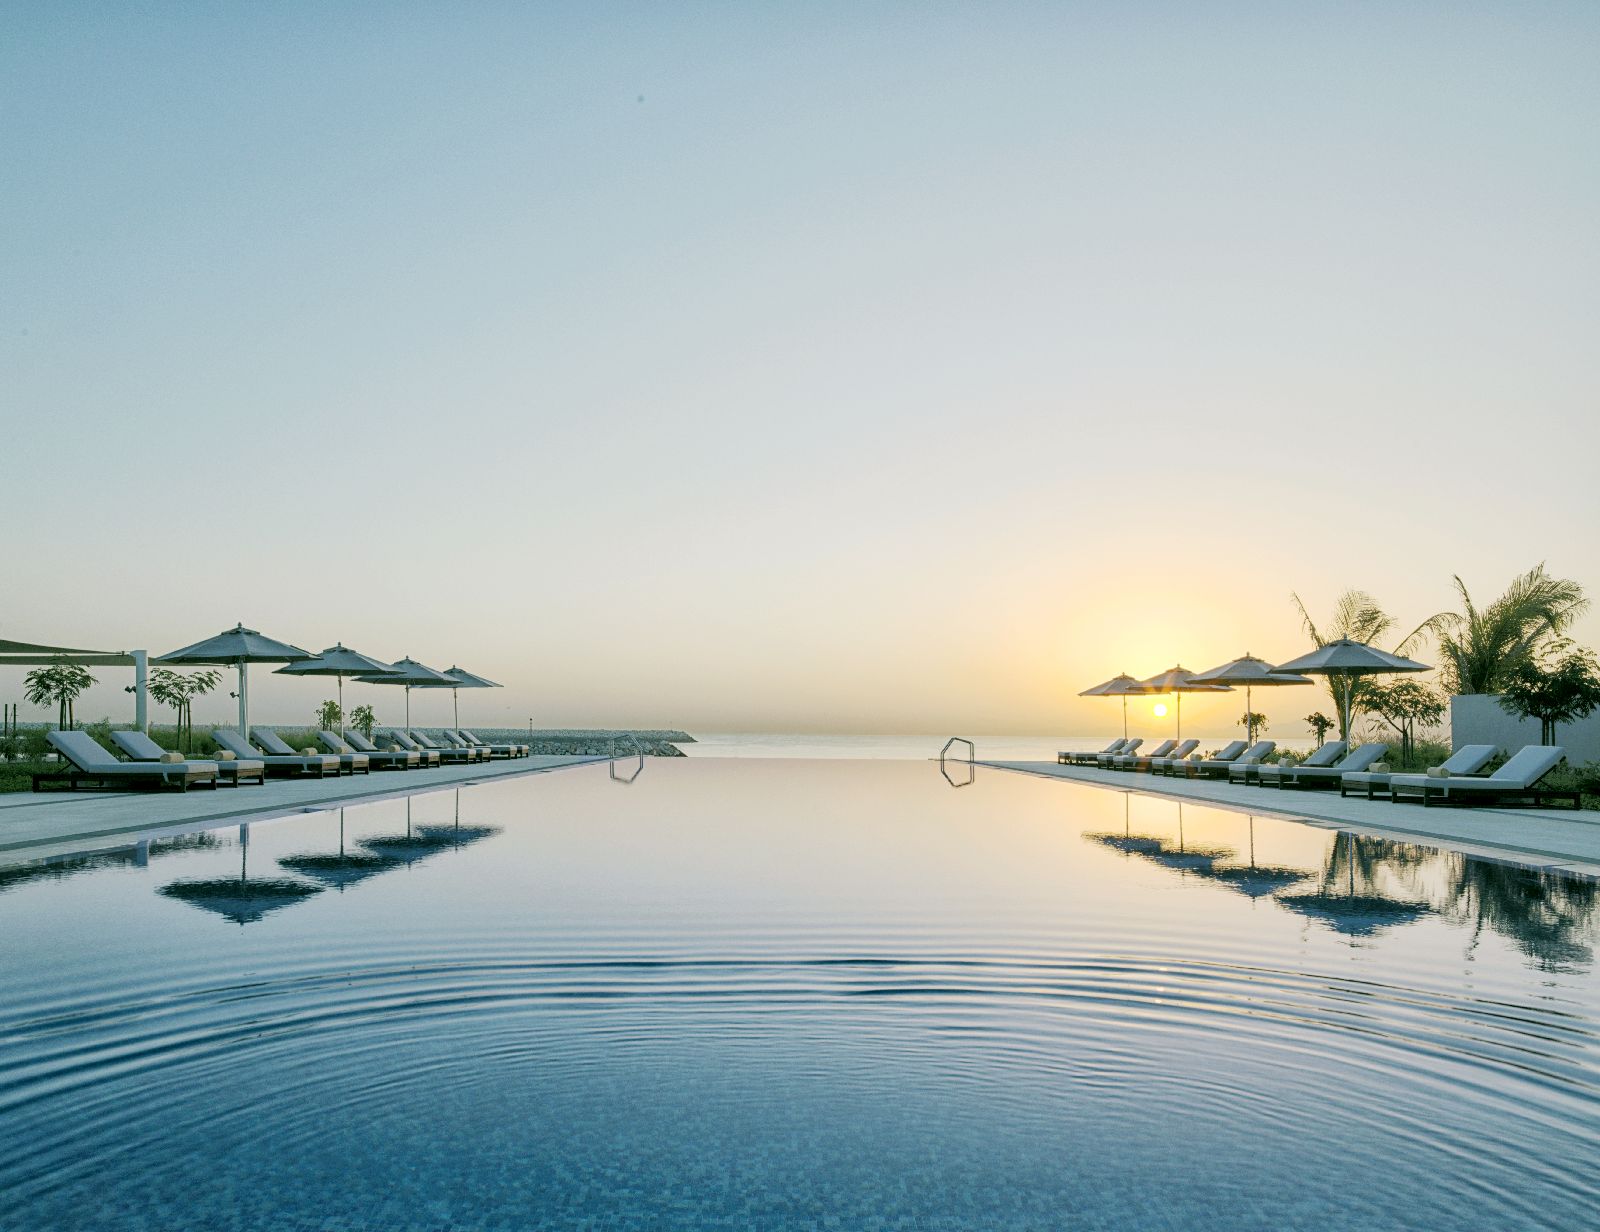 Infinity pool at sunrise at the Kempinski Hotel Muscat in Oman